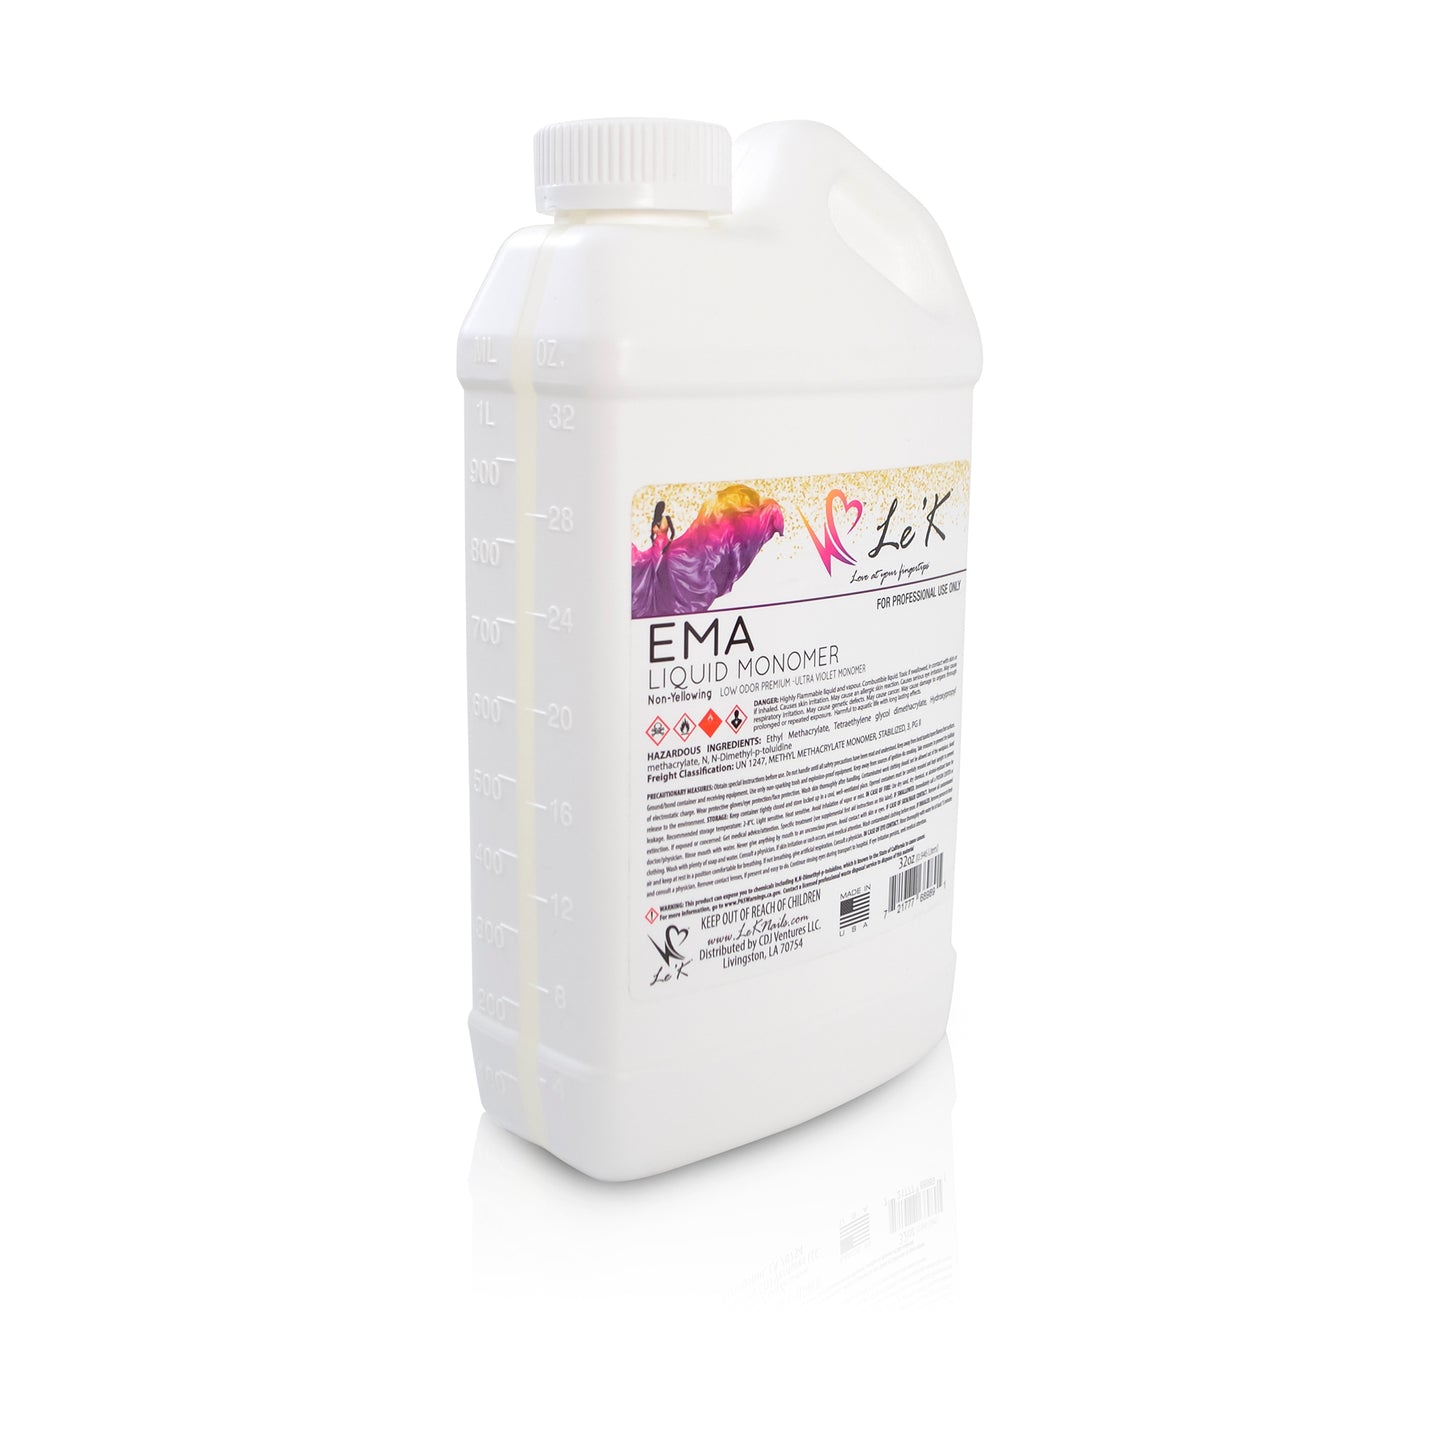 Le'K EMA Liquid Monomer - 32 oz